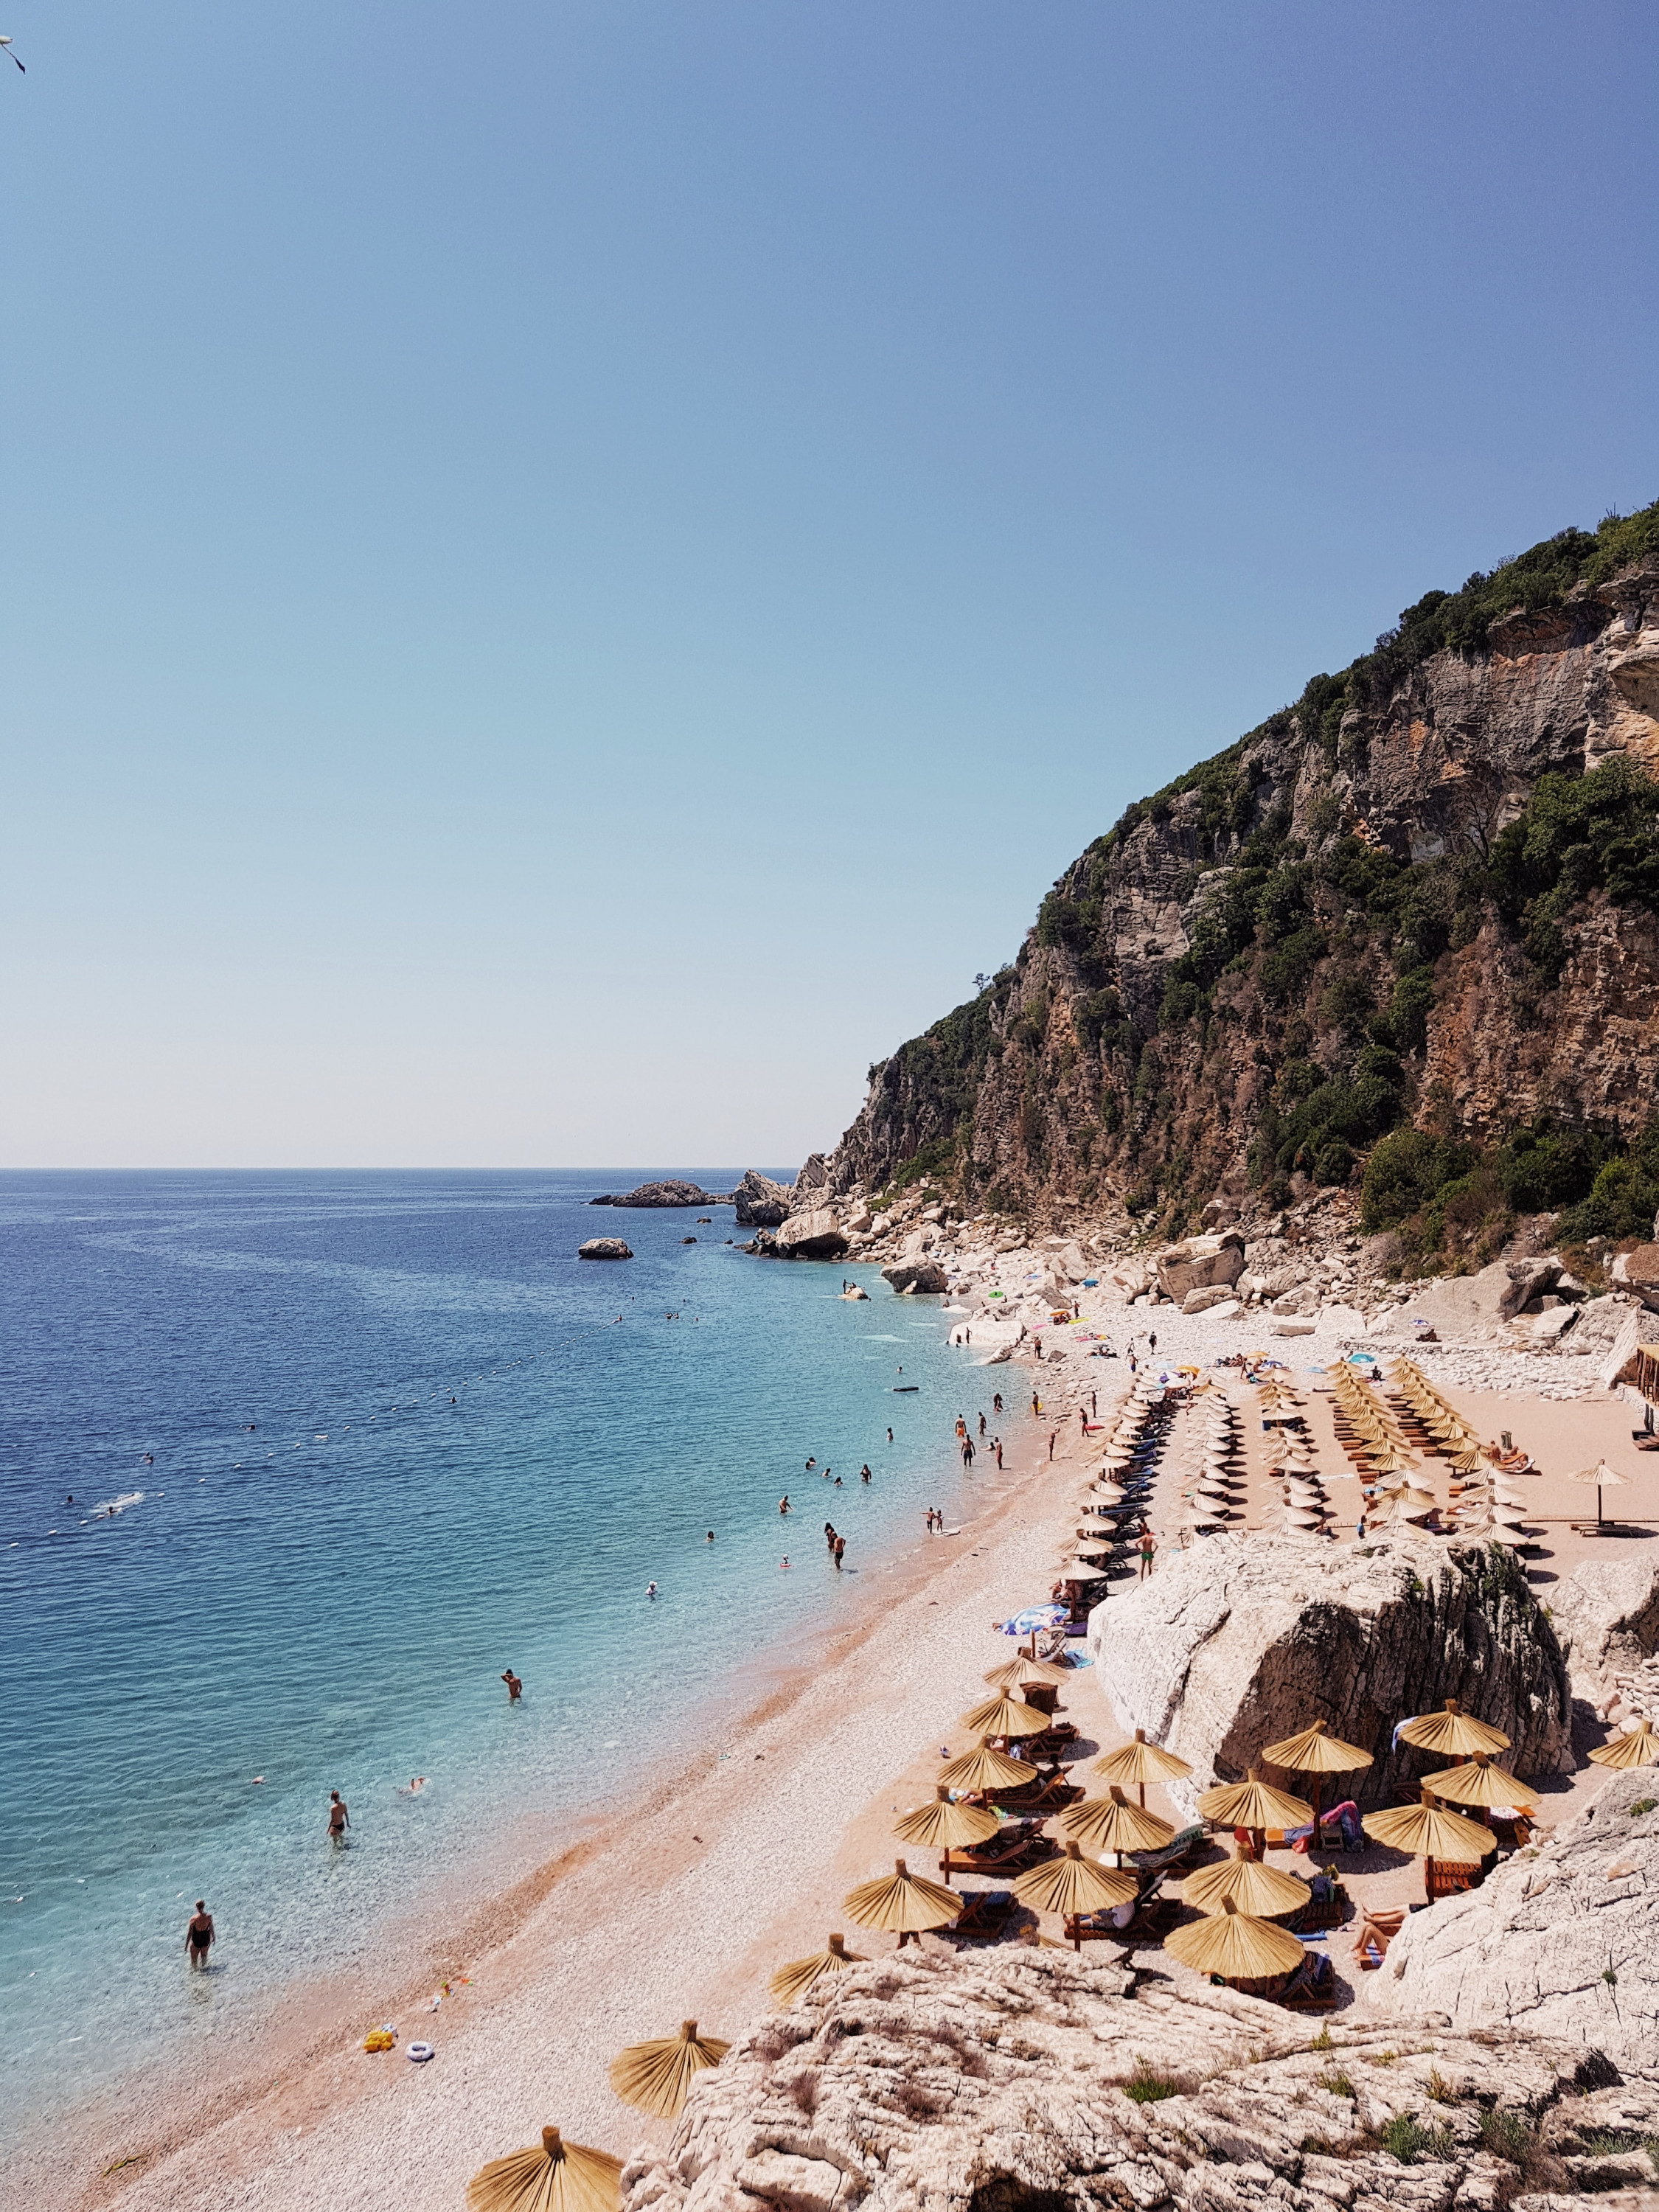 a cliffside beach in montenegro